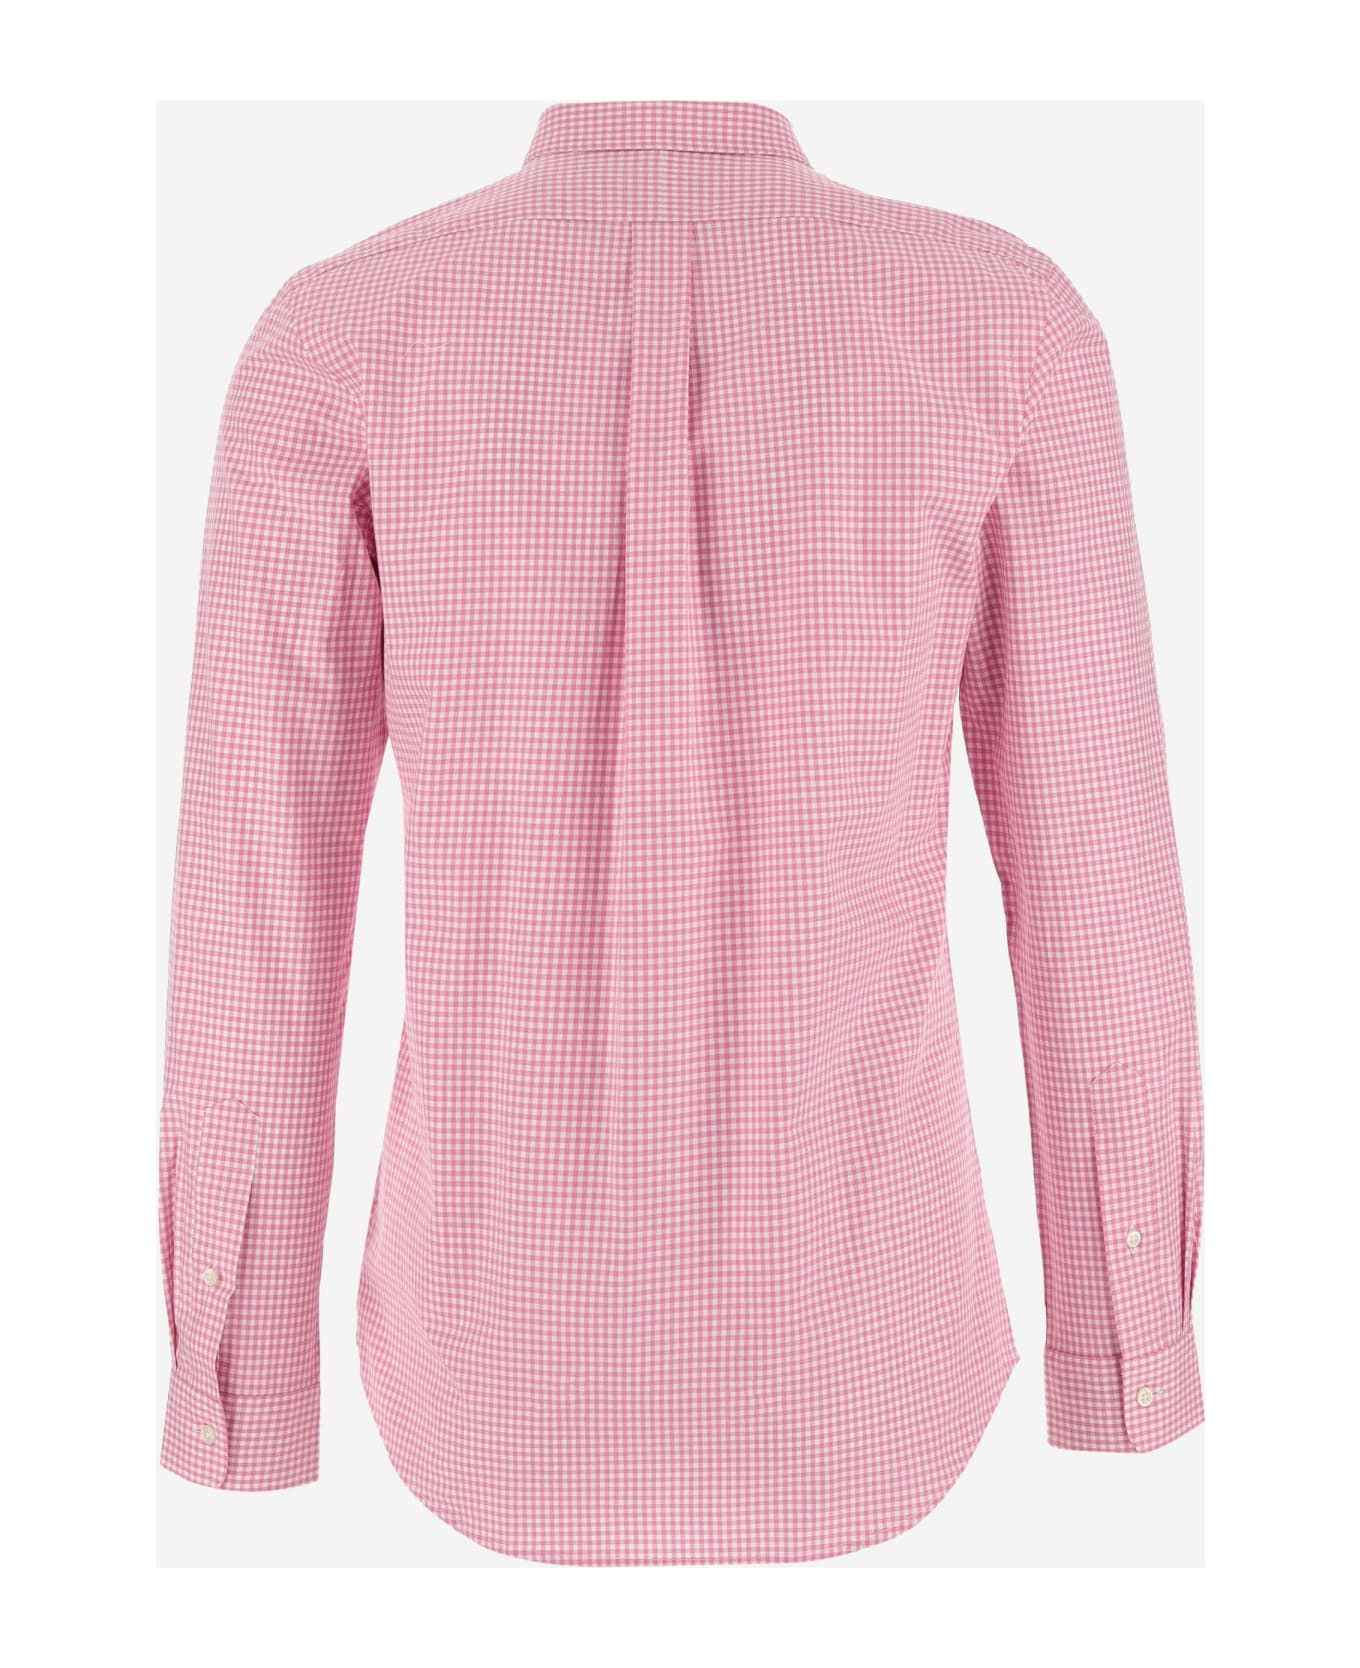 Ralph Lauren Stretch Cotton Shirt With Plaid Pattern - Pink